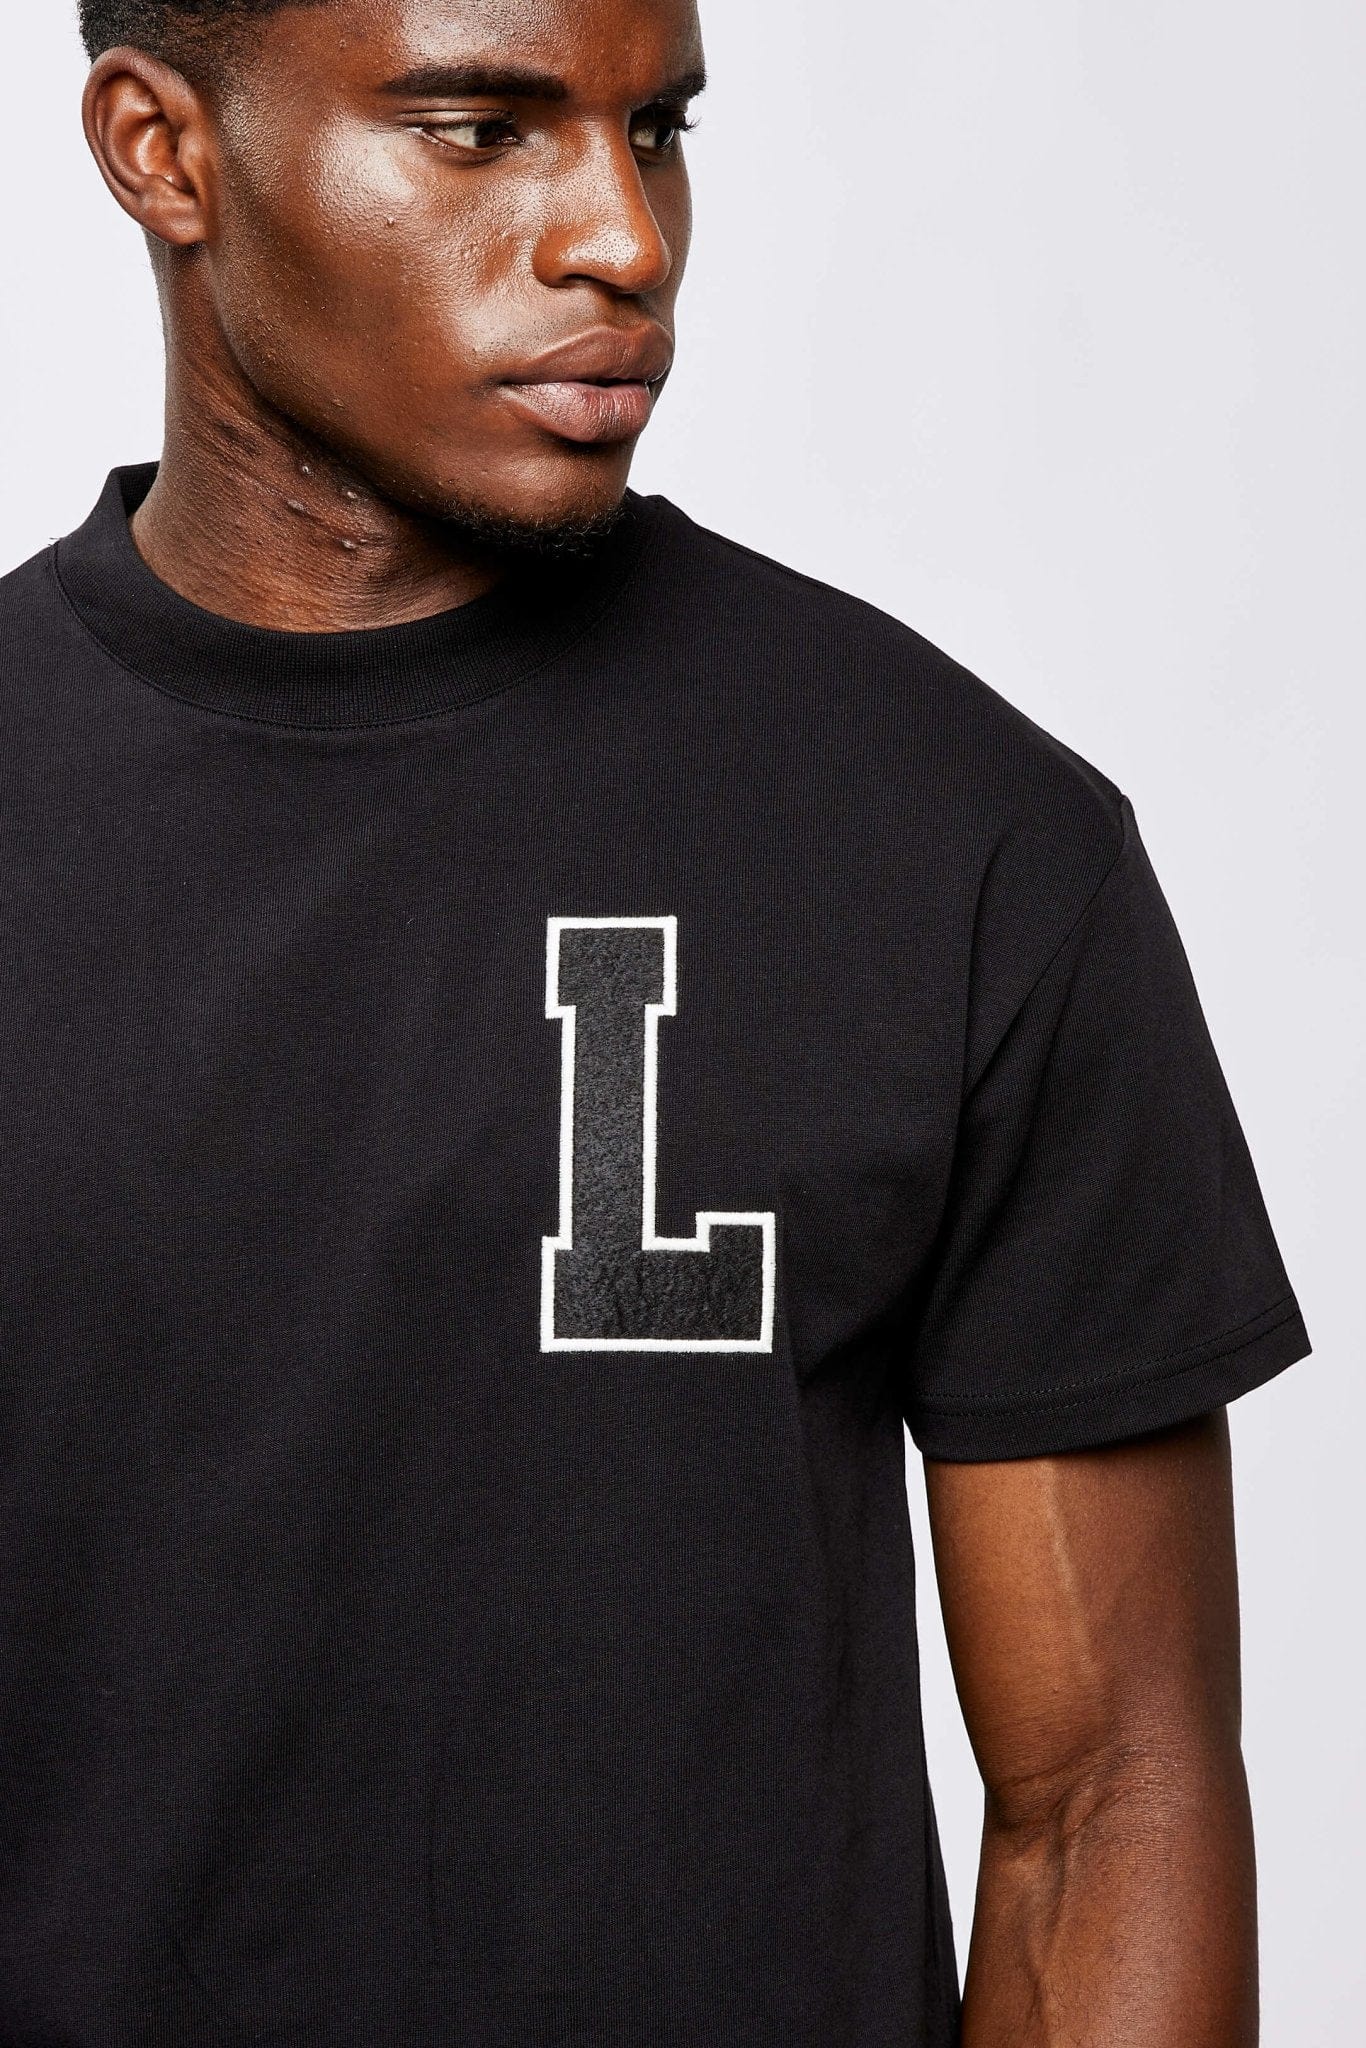 Legend London T-SHIRT VARSITY L T-SHIRT - BLACK